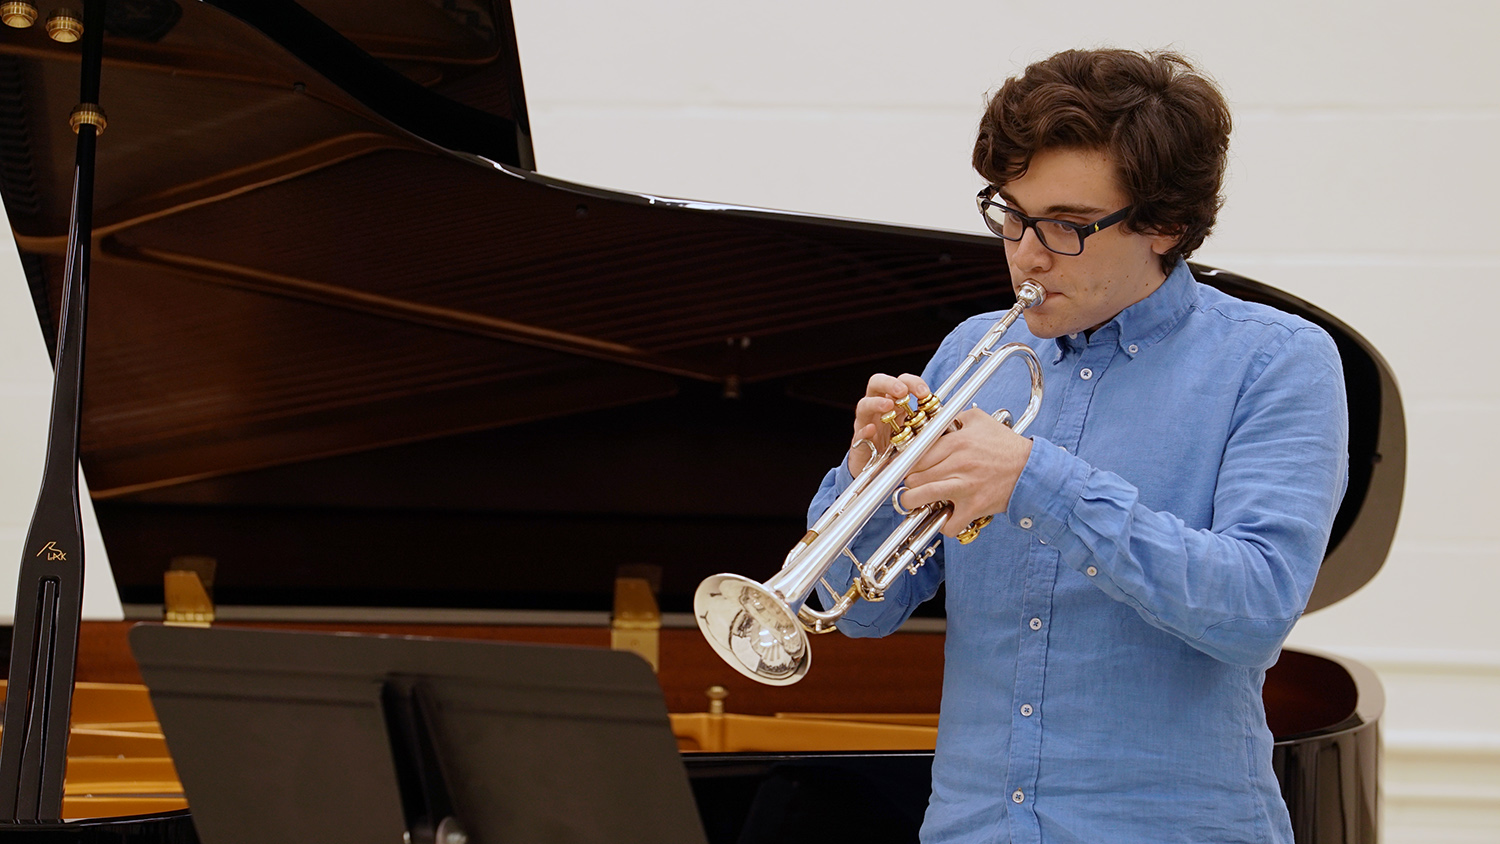 Julian Jeffrey-Wilensky plays the trumpet during a recital